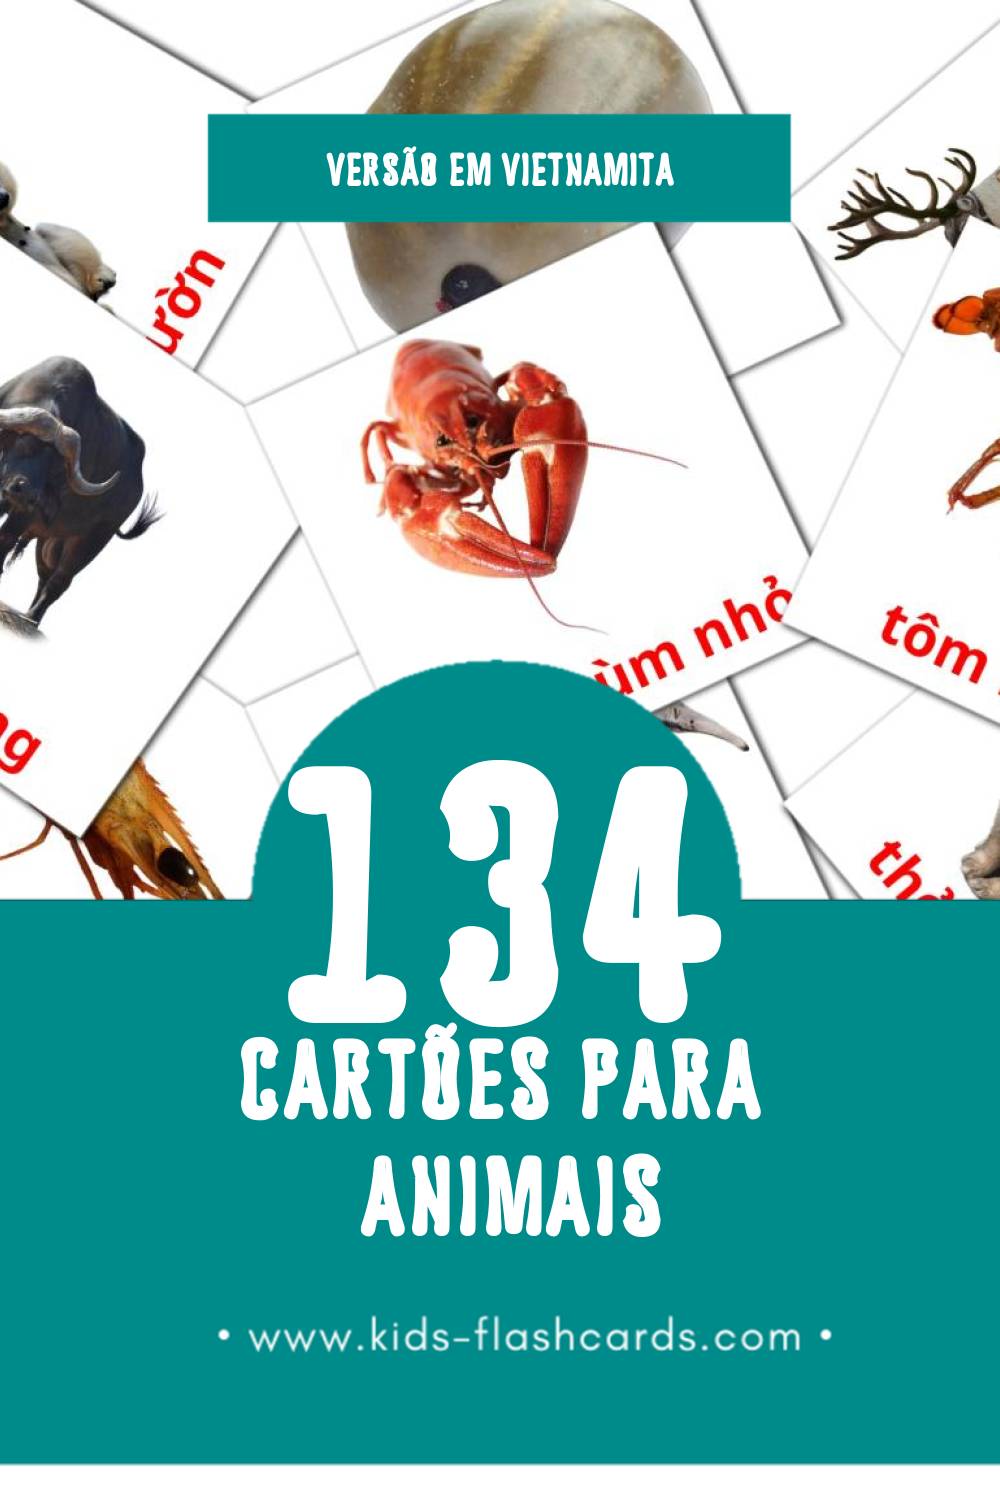 Flashcards de động vật Visuais para Toddlers (134 cartões em Vietnamita)